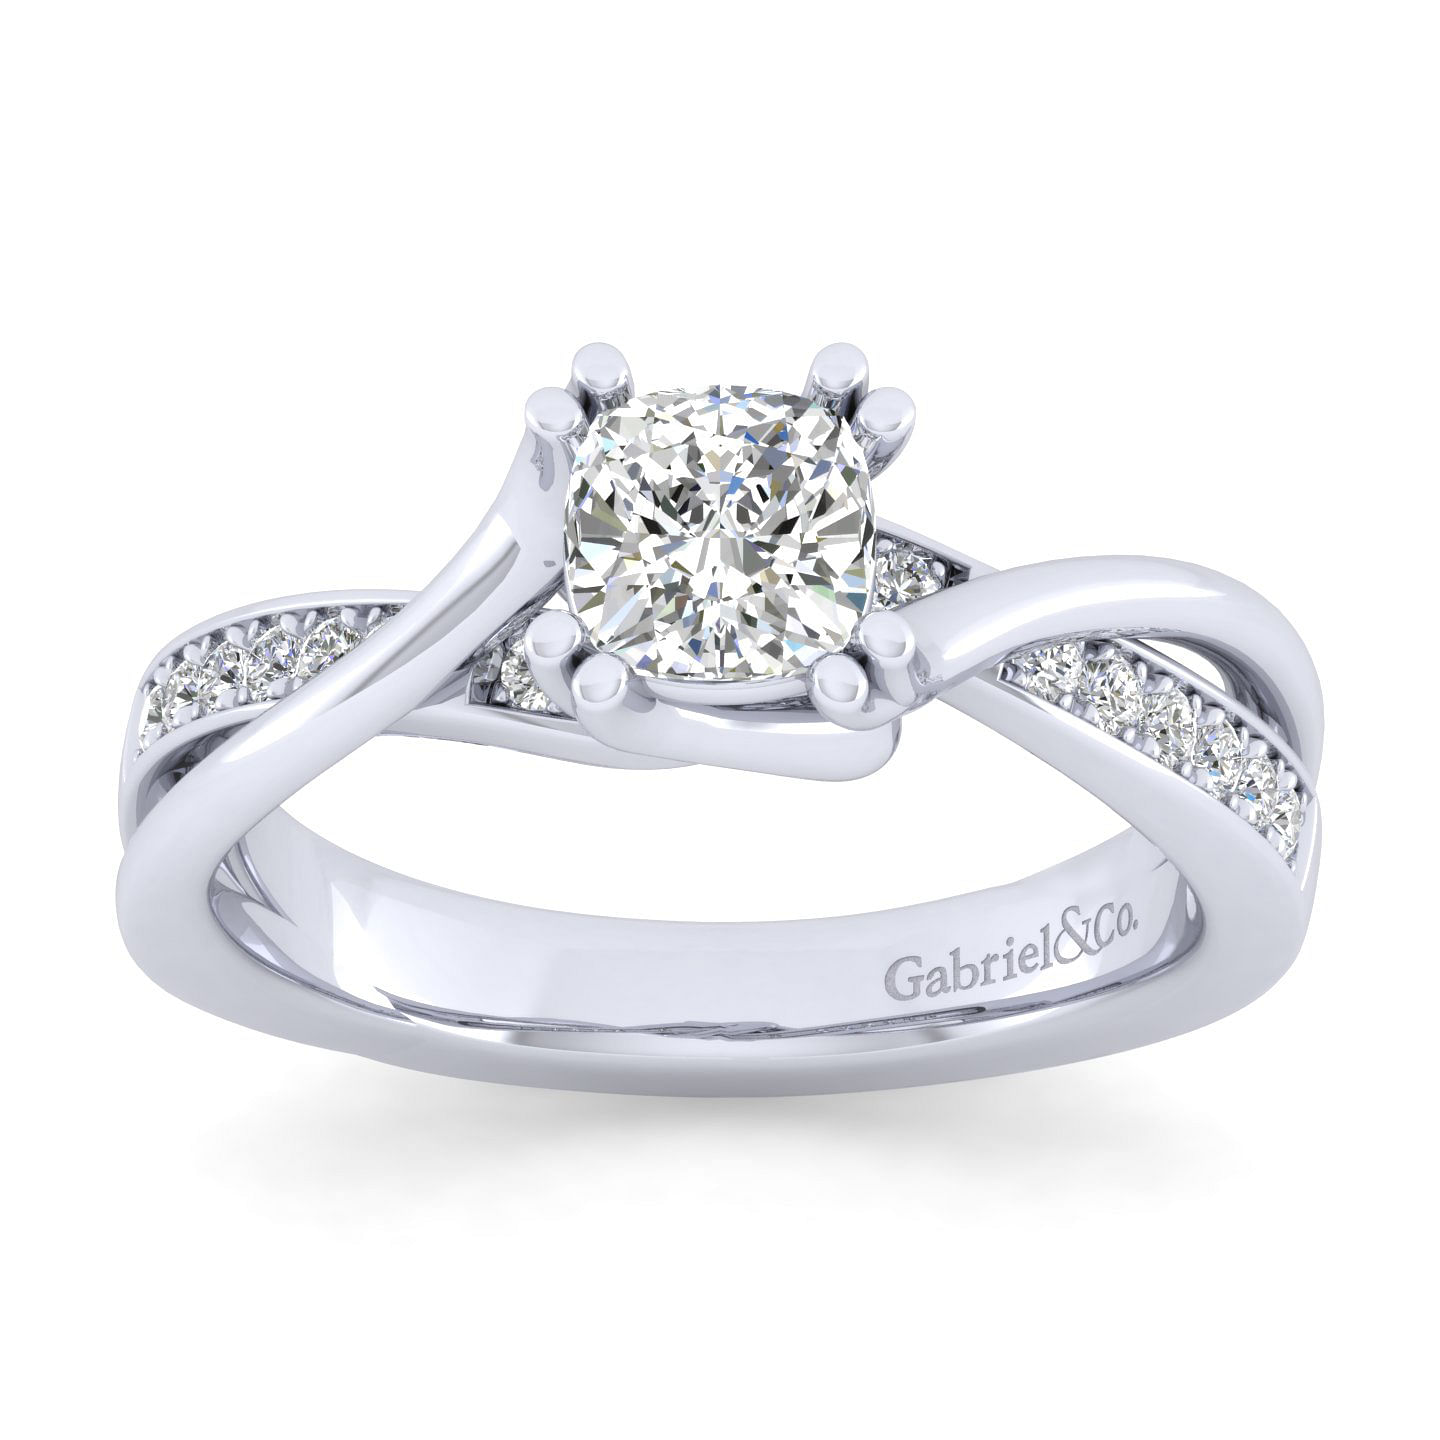 14K White Gold Twisted Cushion Cut Diamond Engagement Ring